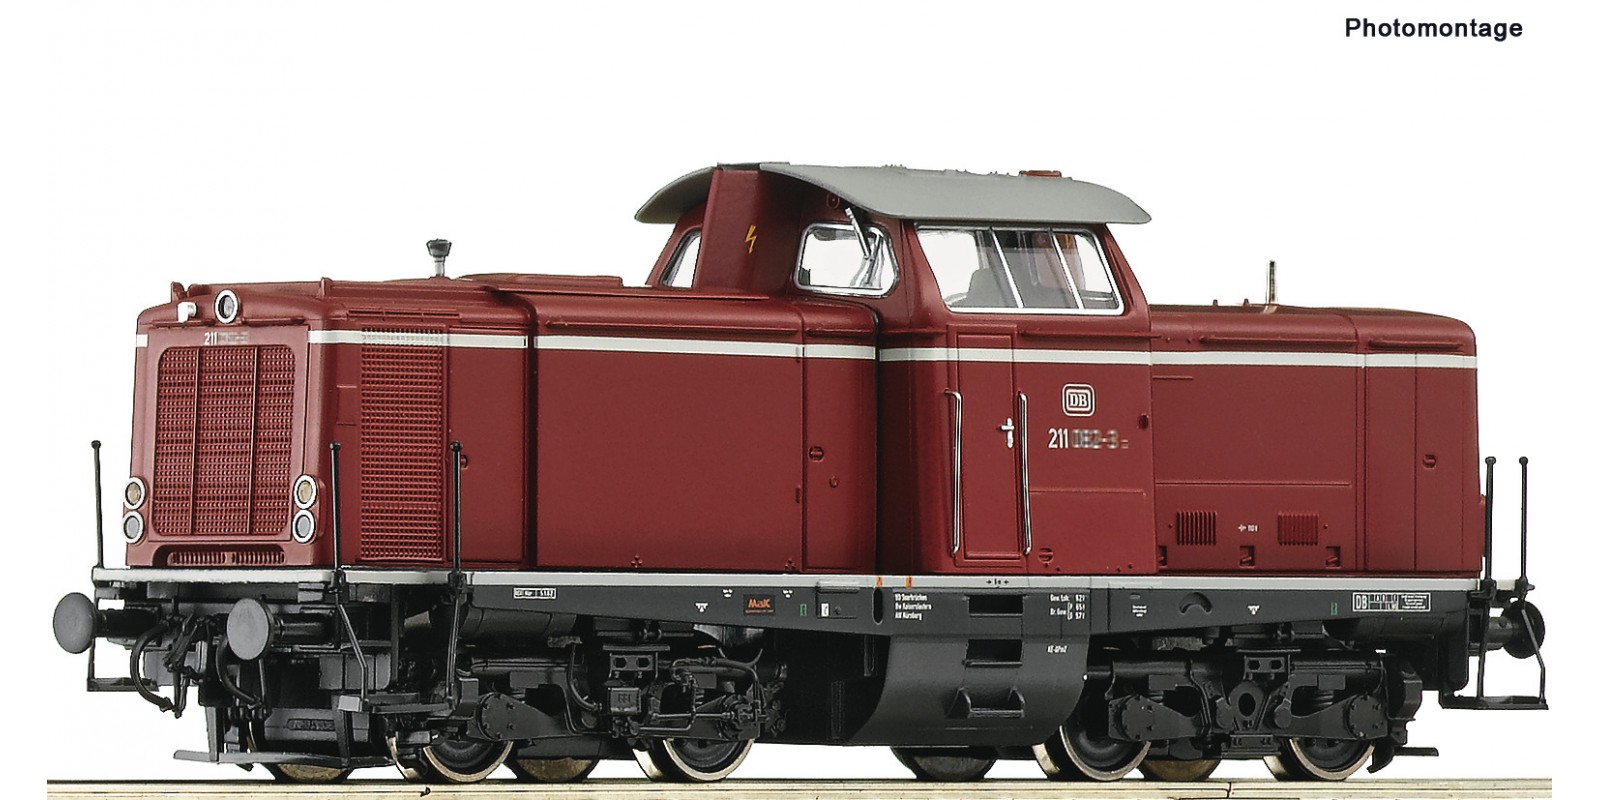 RO52527 - Diesel locomotive class 211, DB